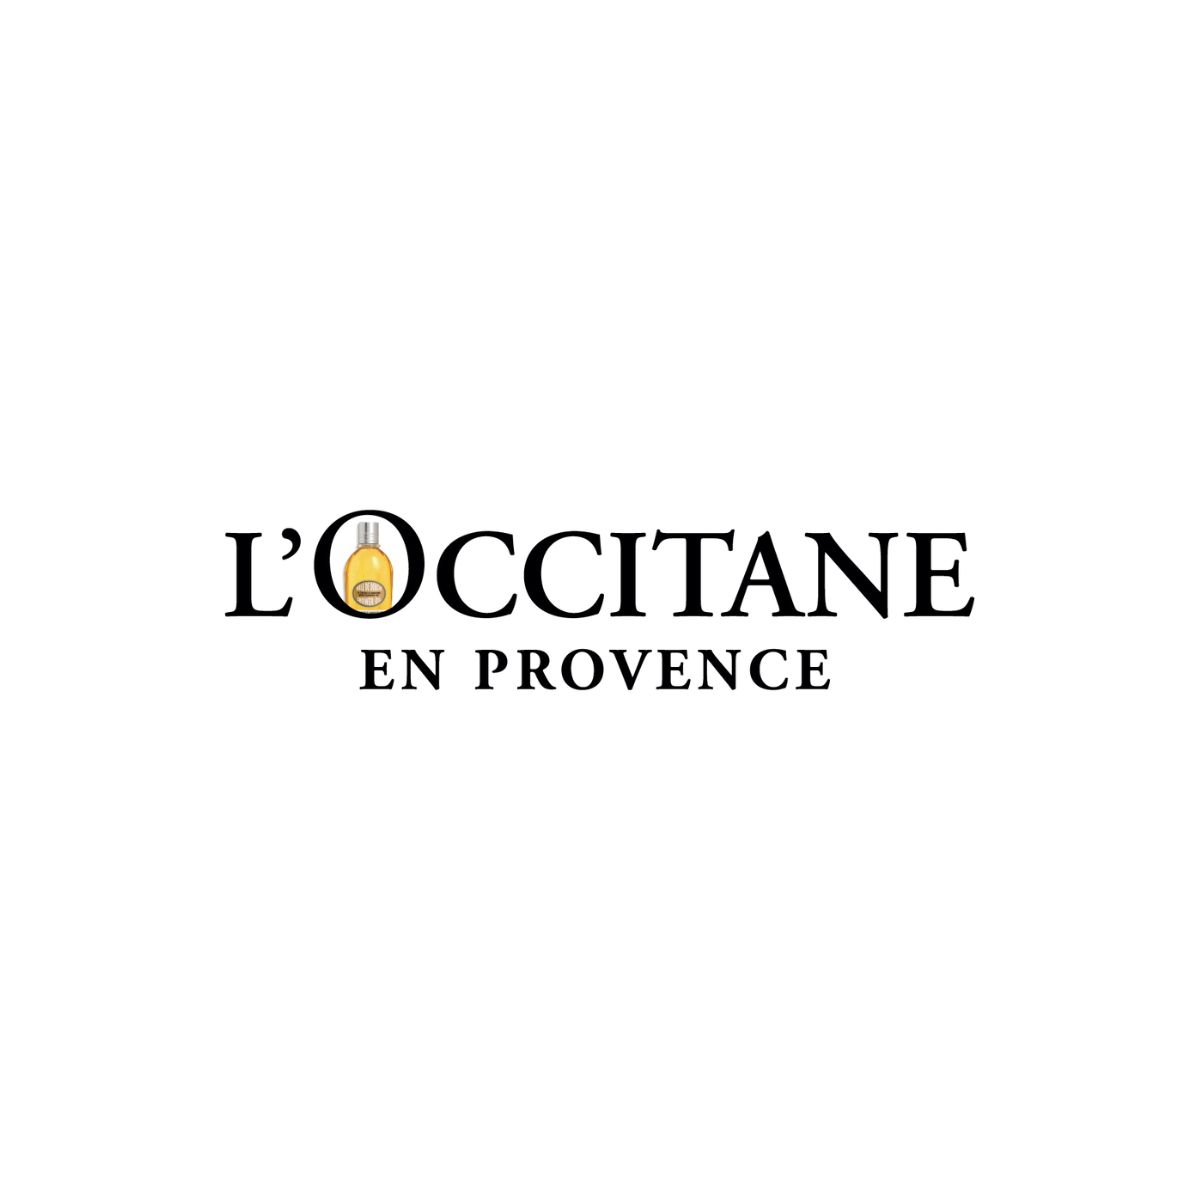 L'OCCITANE En Provence logo